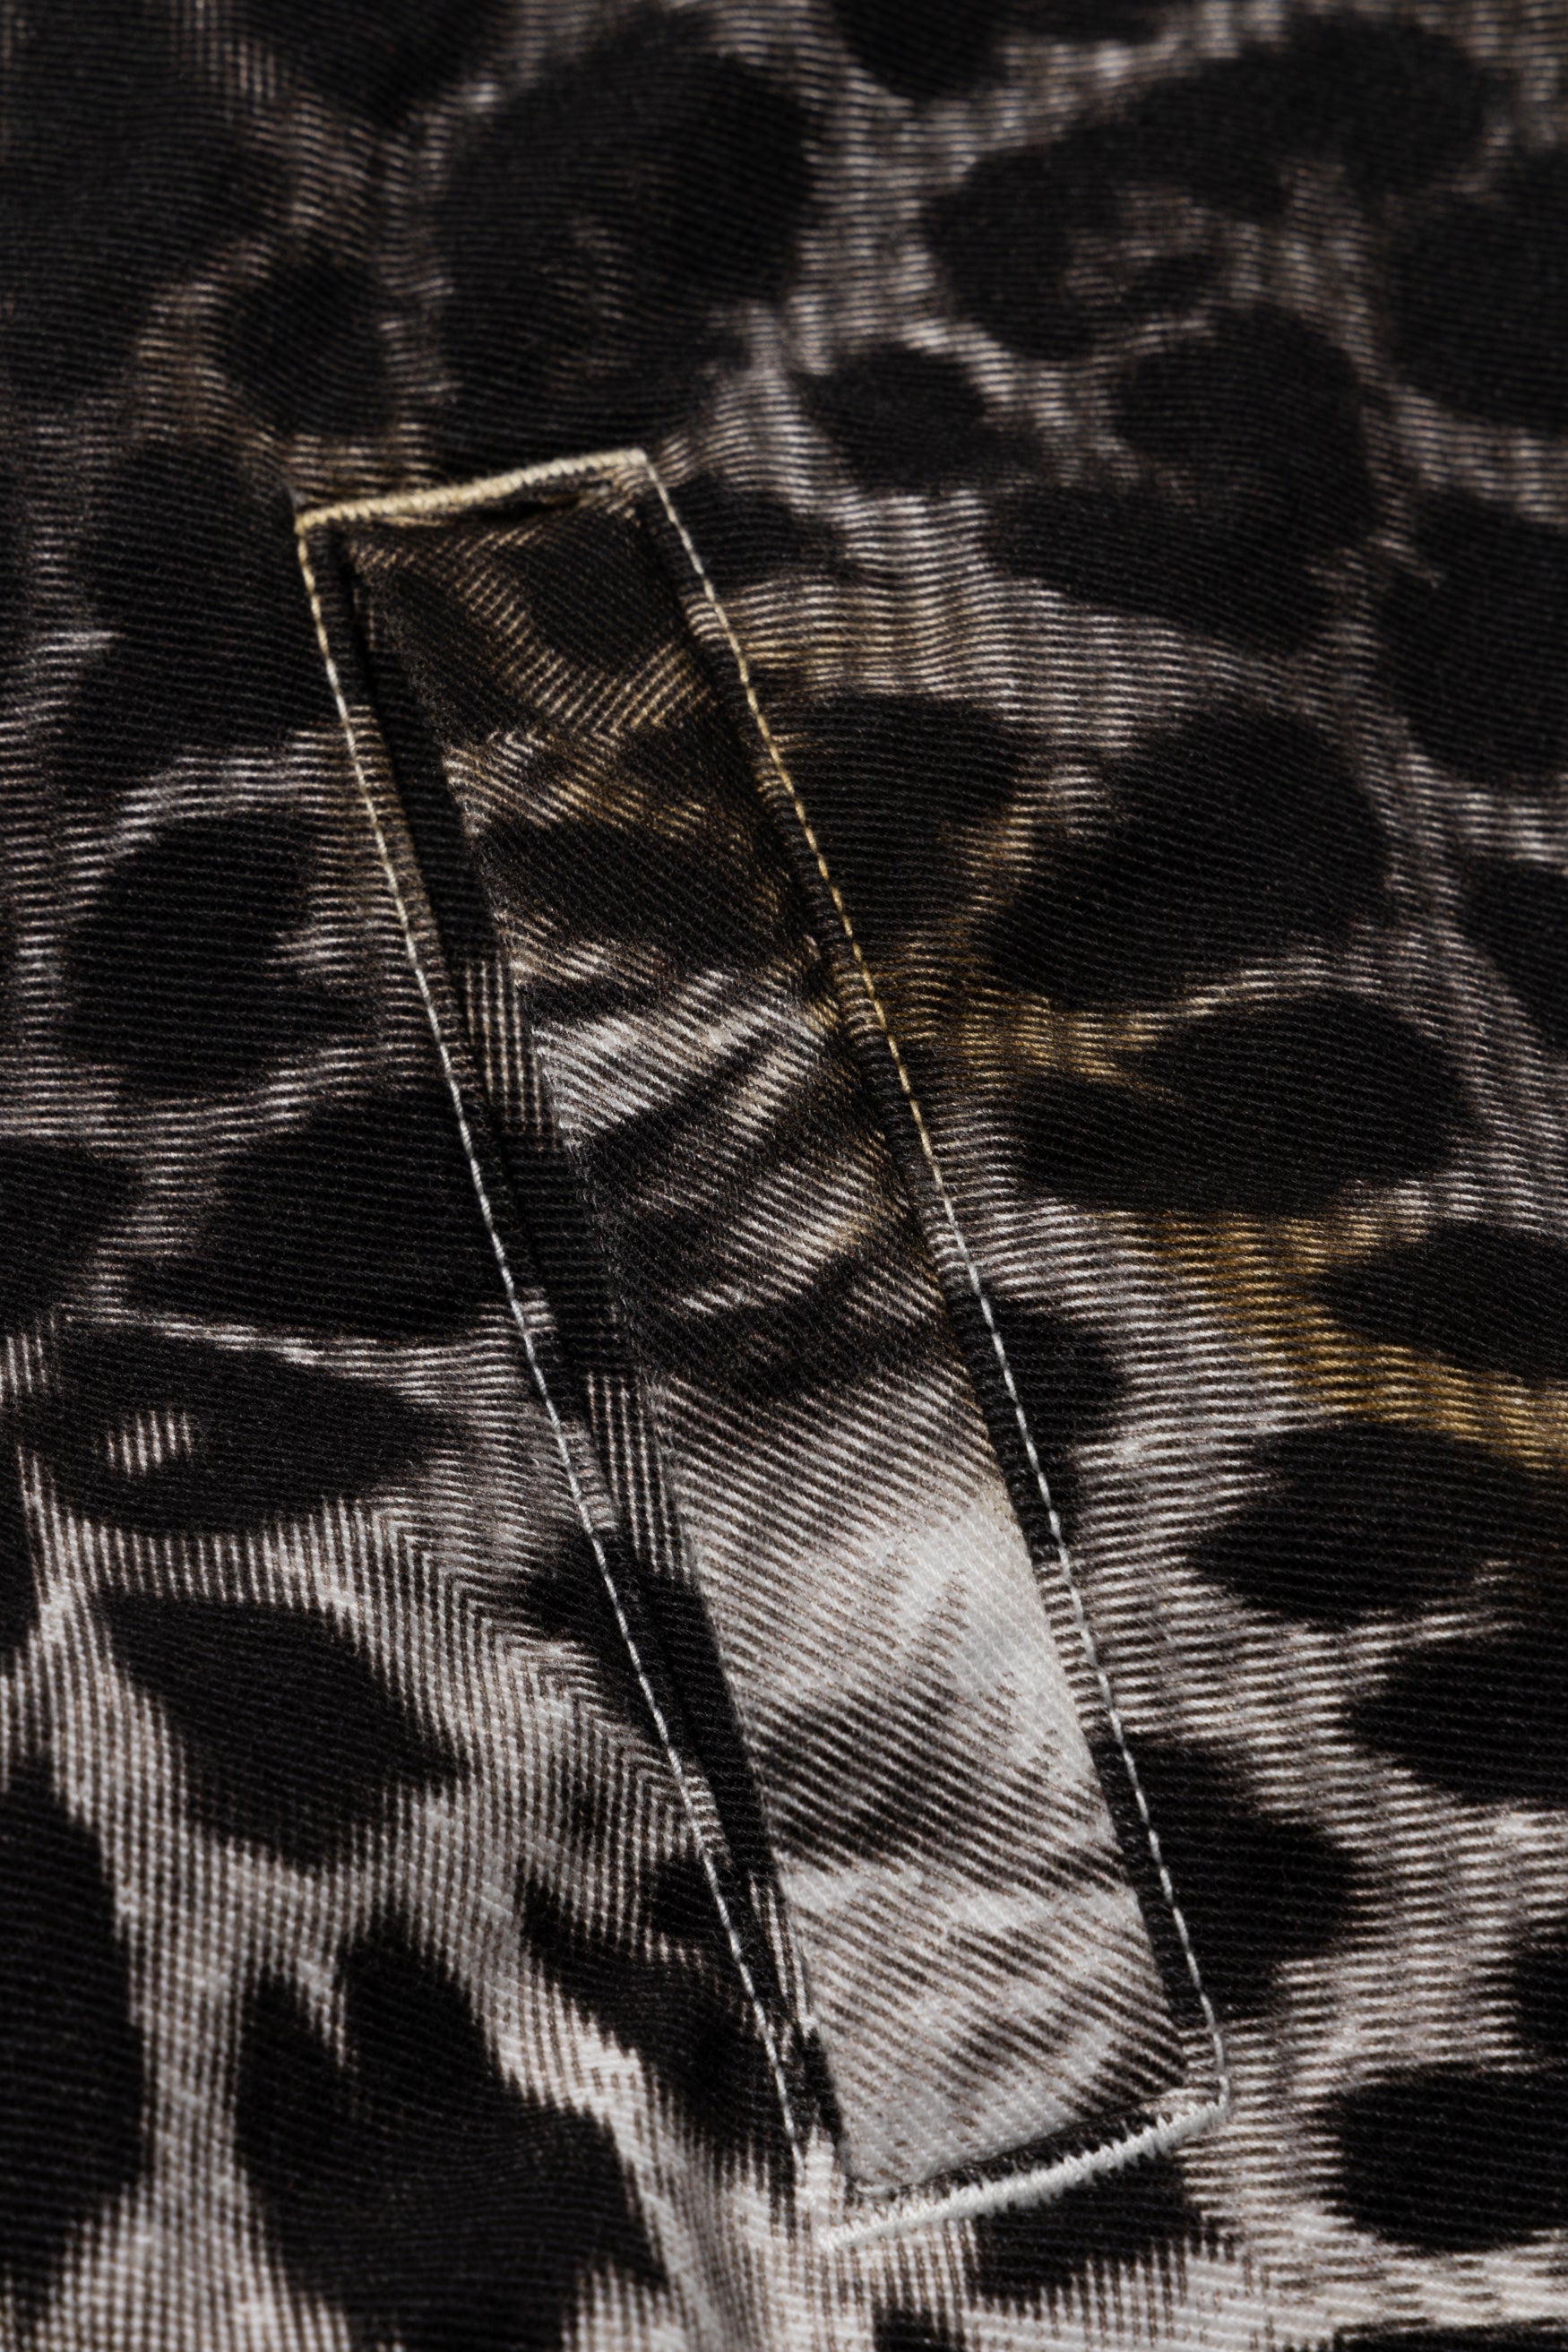 Load image into Gallery viewer, Leopard Zip Through Denim Jacket